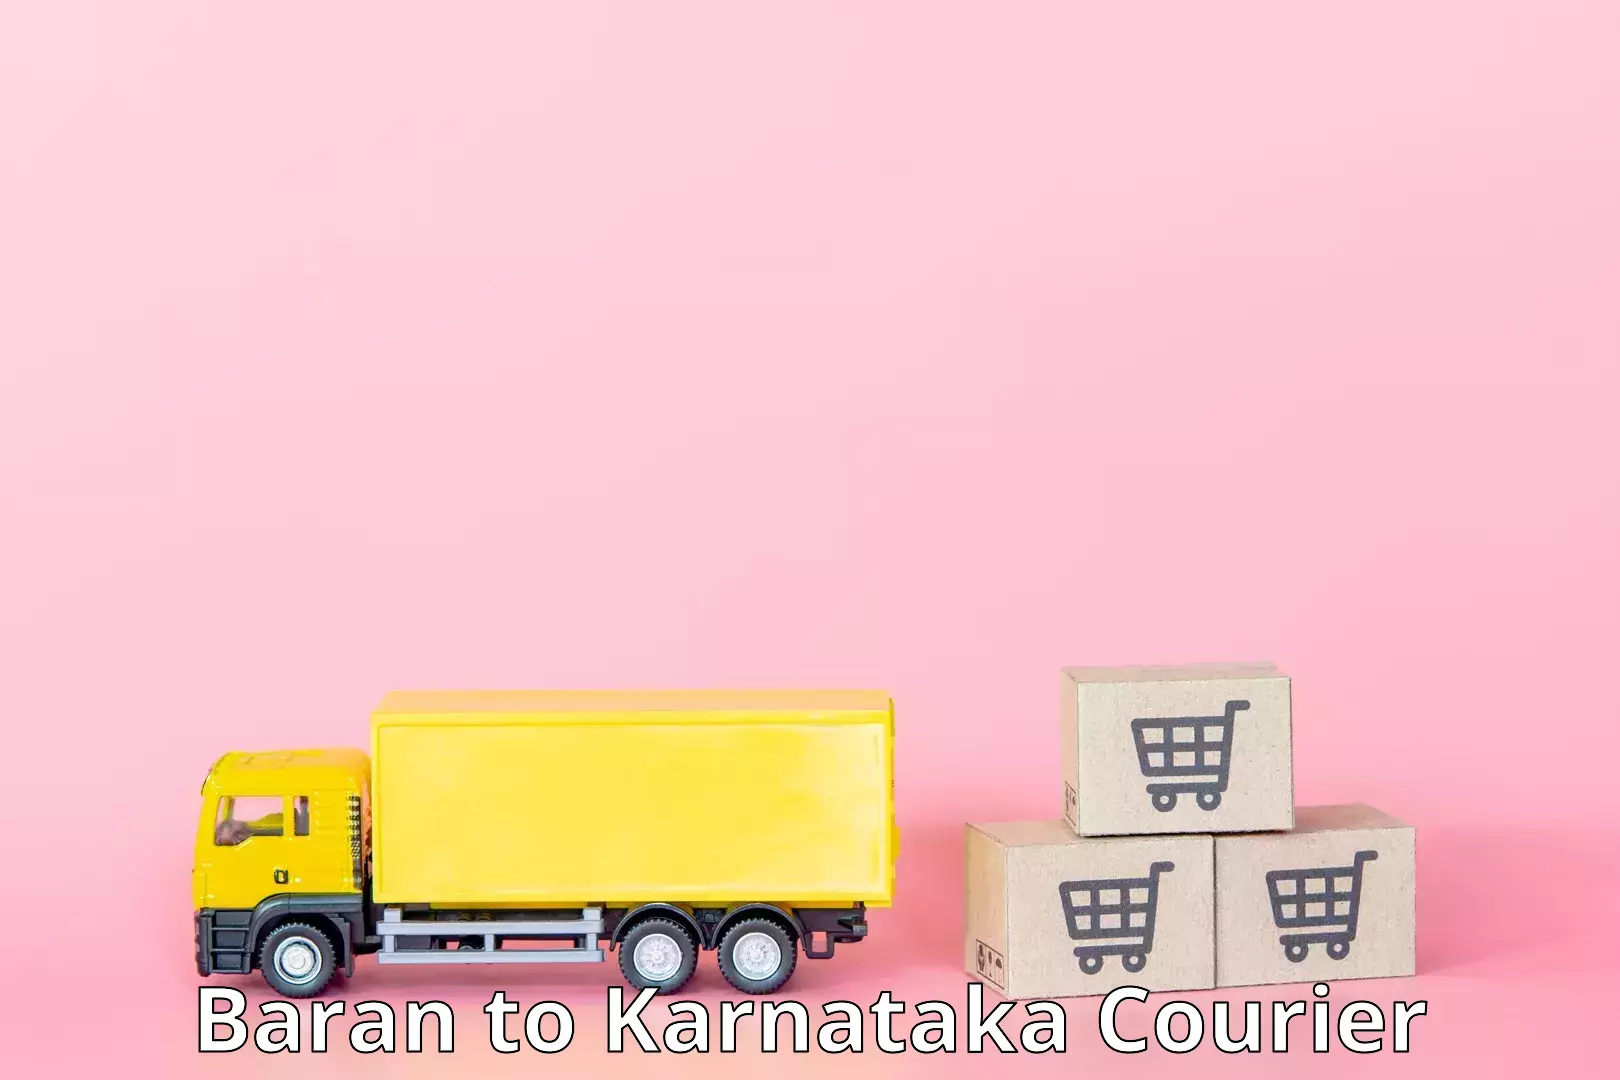 Express delivery network Baran to Karnataka